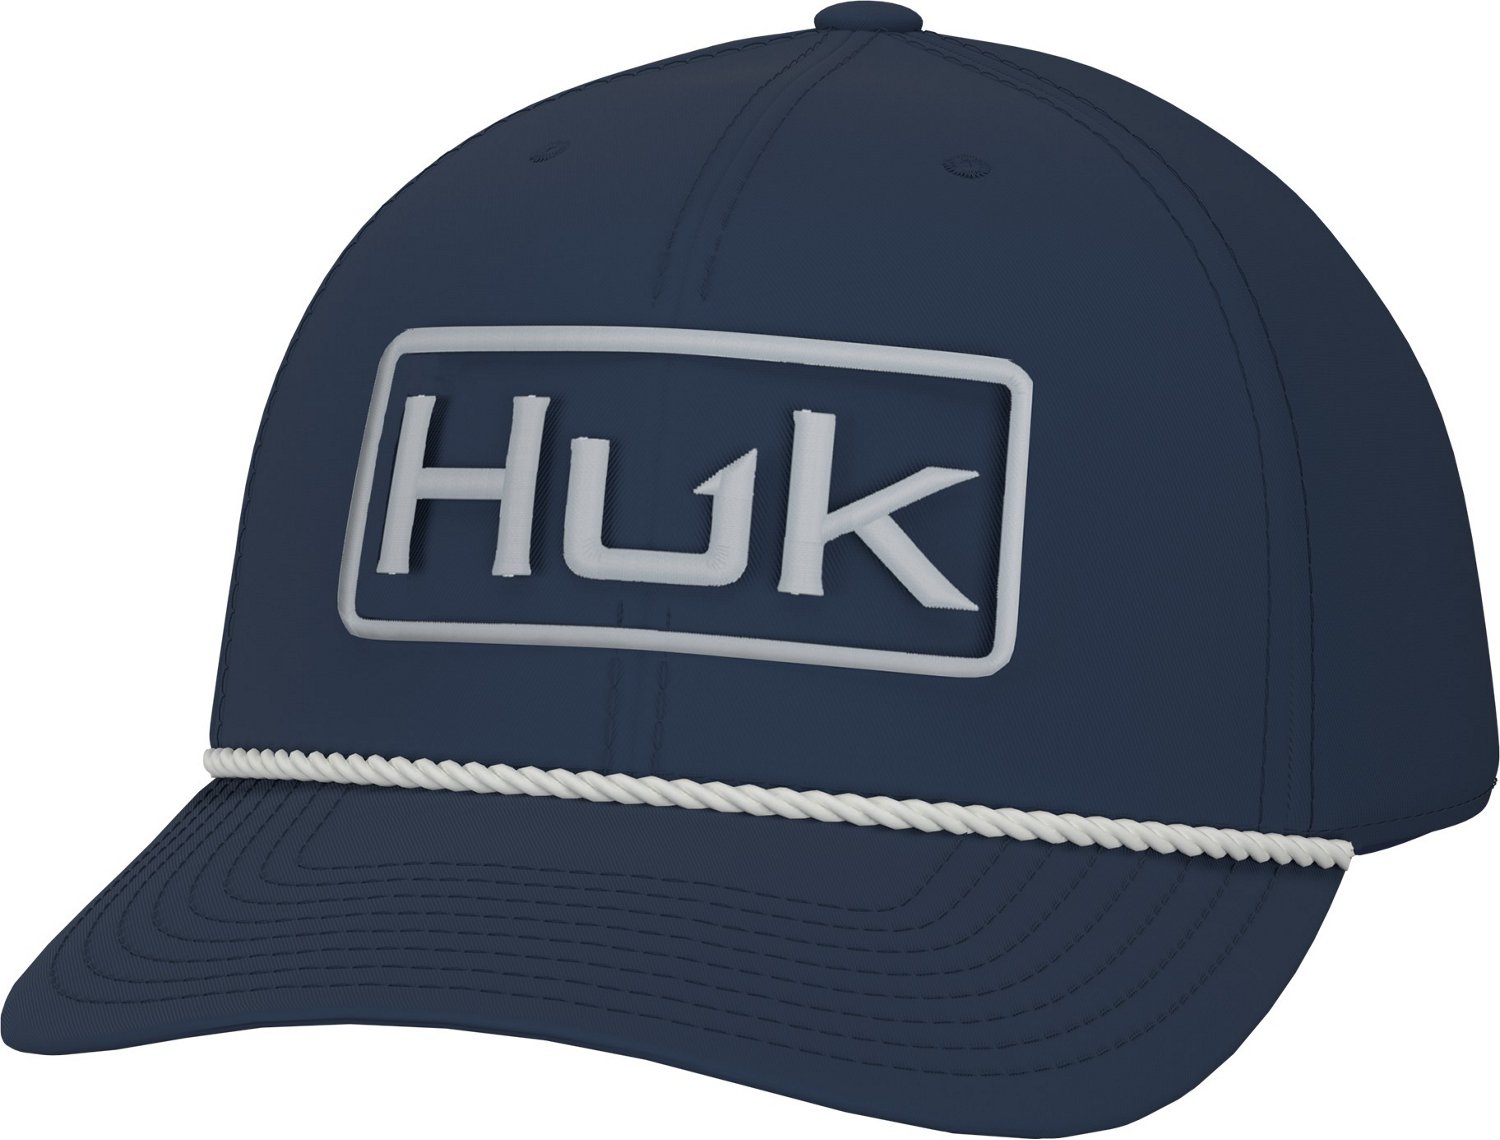 Huk Men's Captain Huk Rope Hat